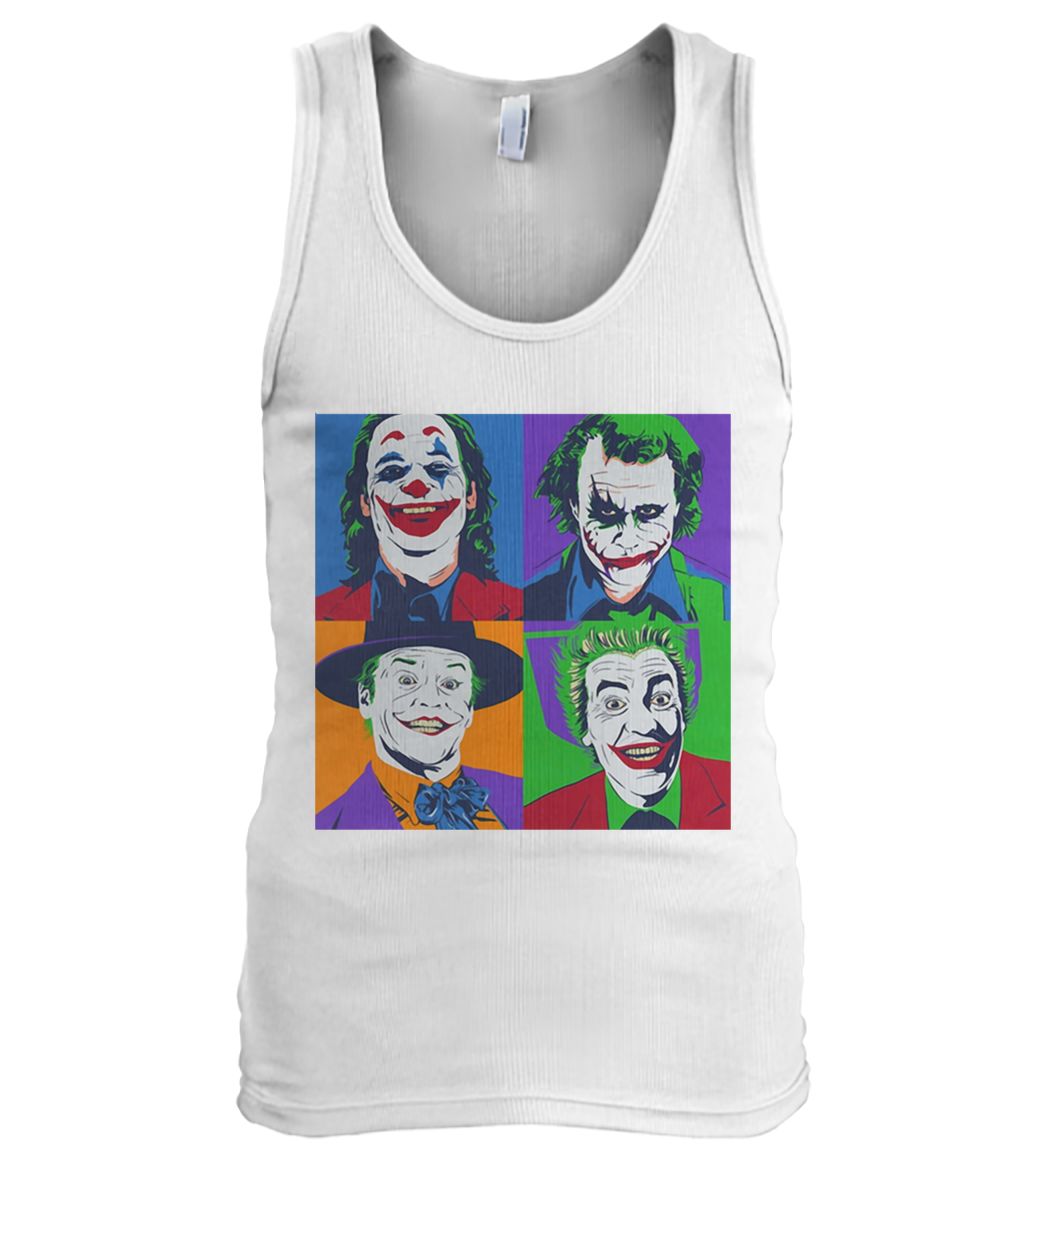 Joker pop art men's tank top